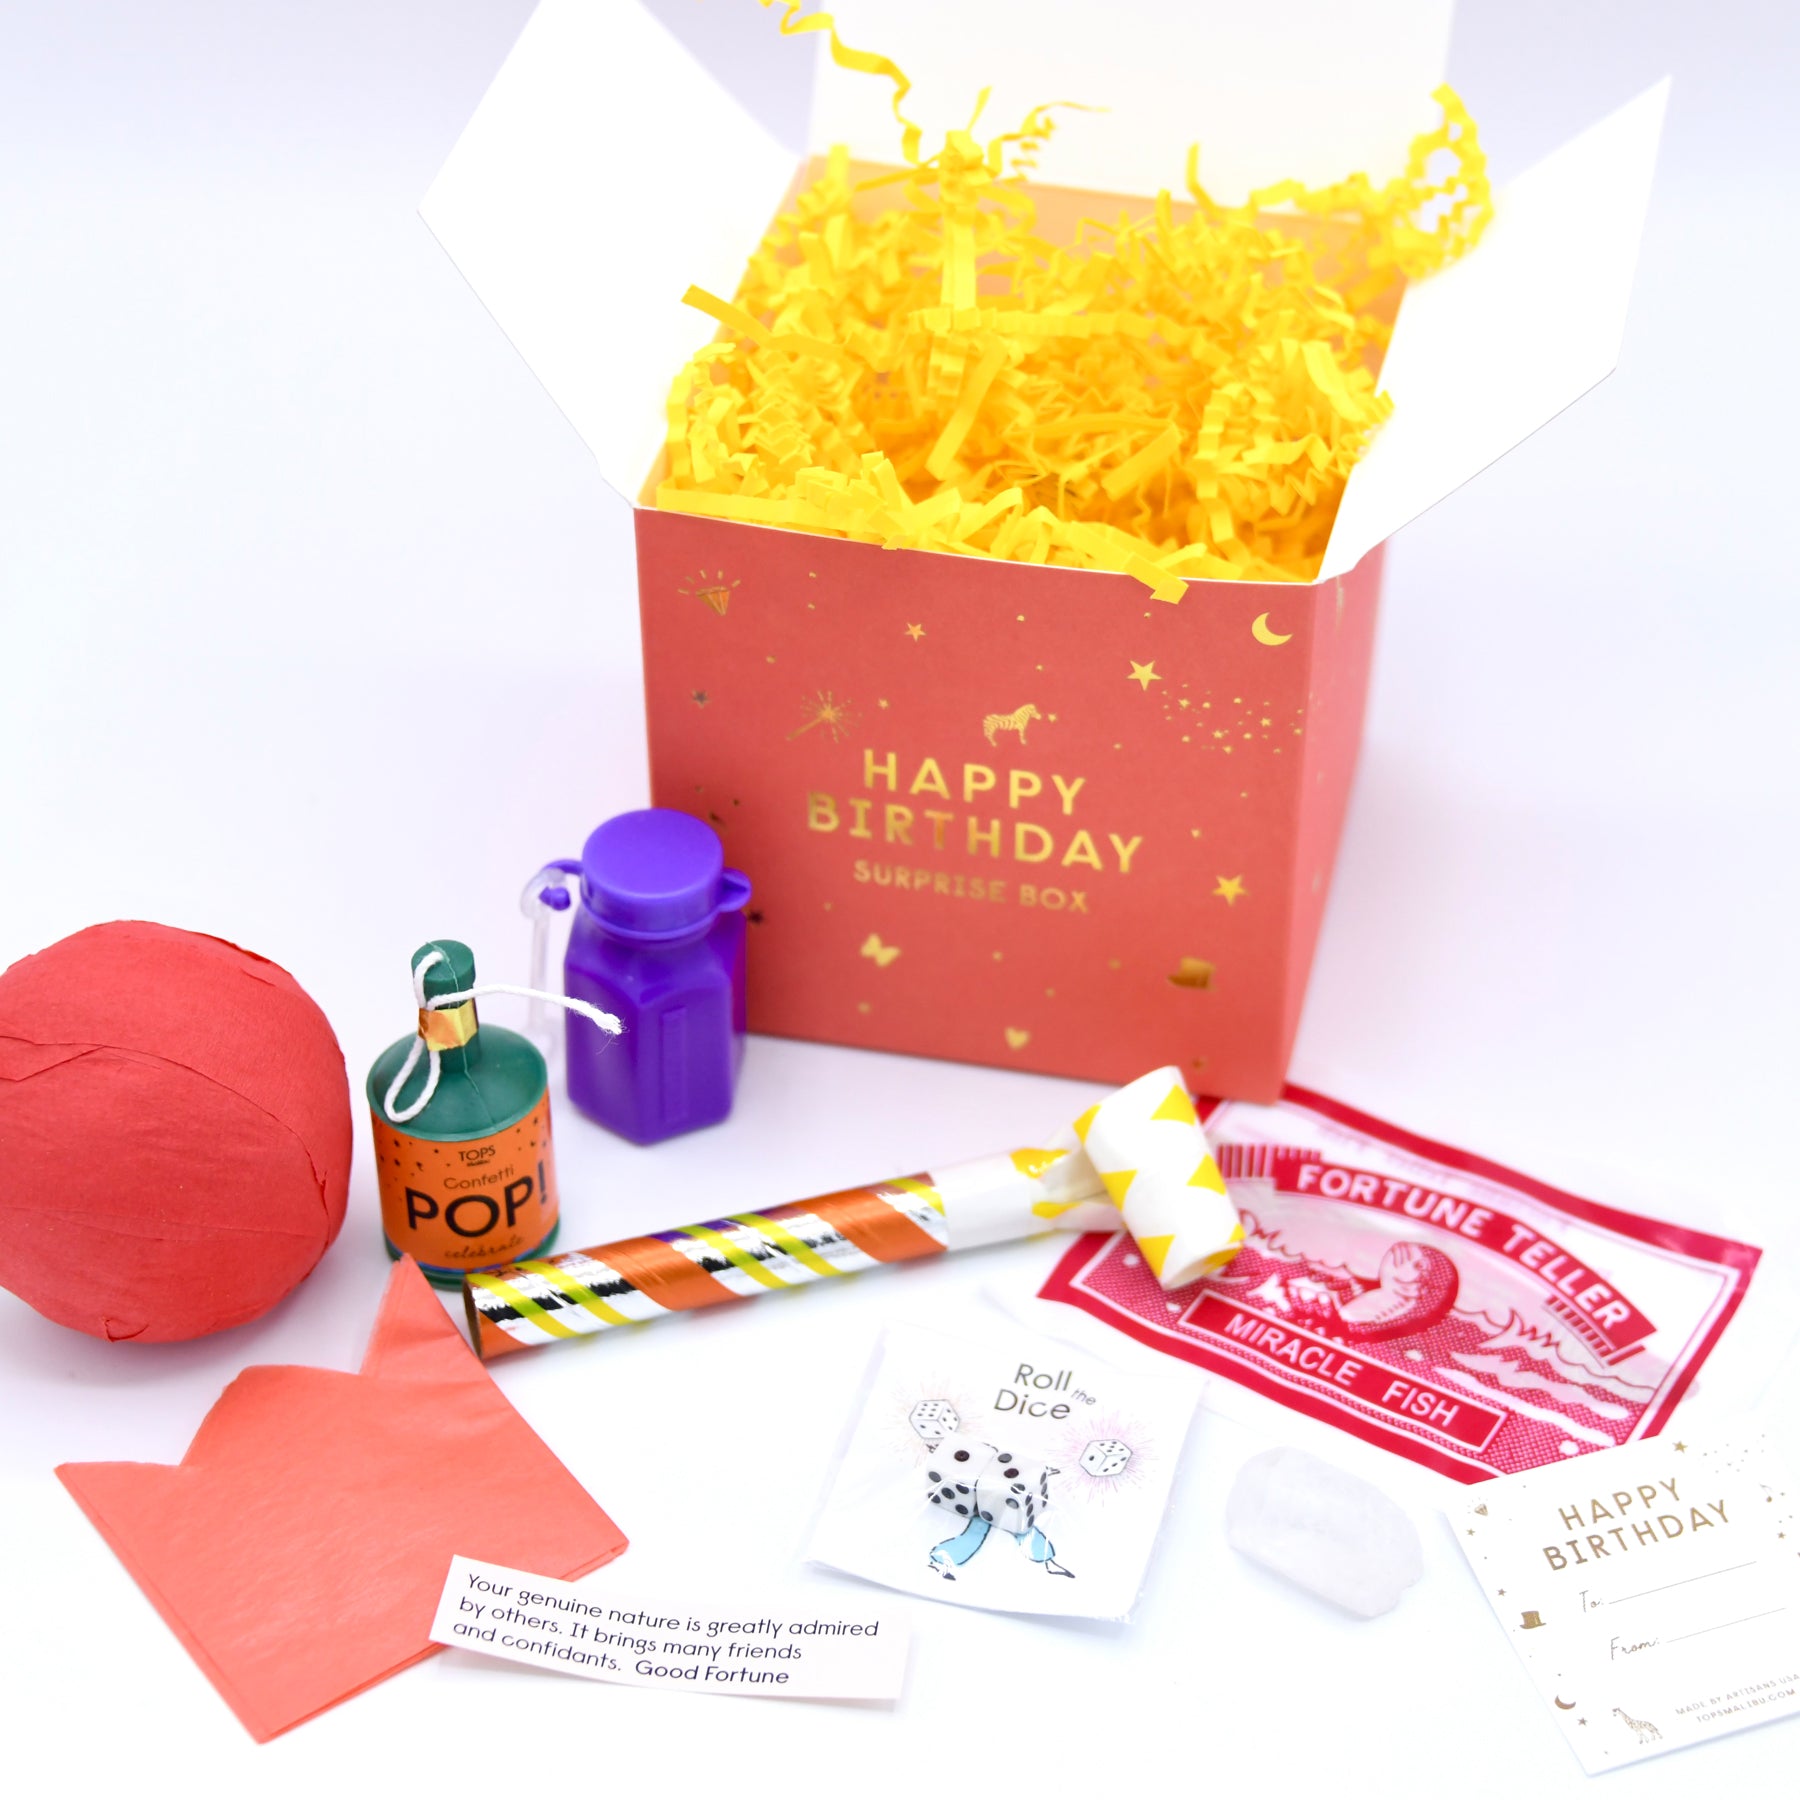 Birthday surprise gift ideas for best friend - Show your abundant love!